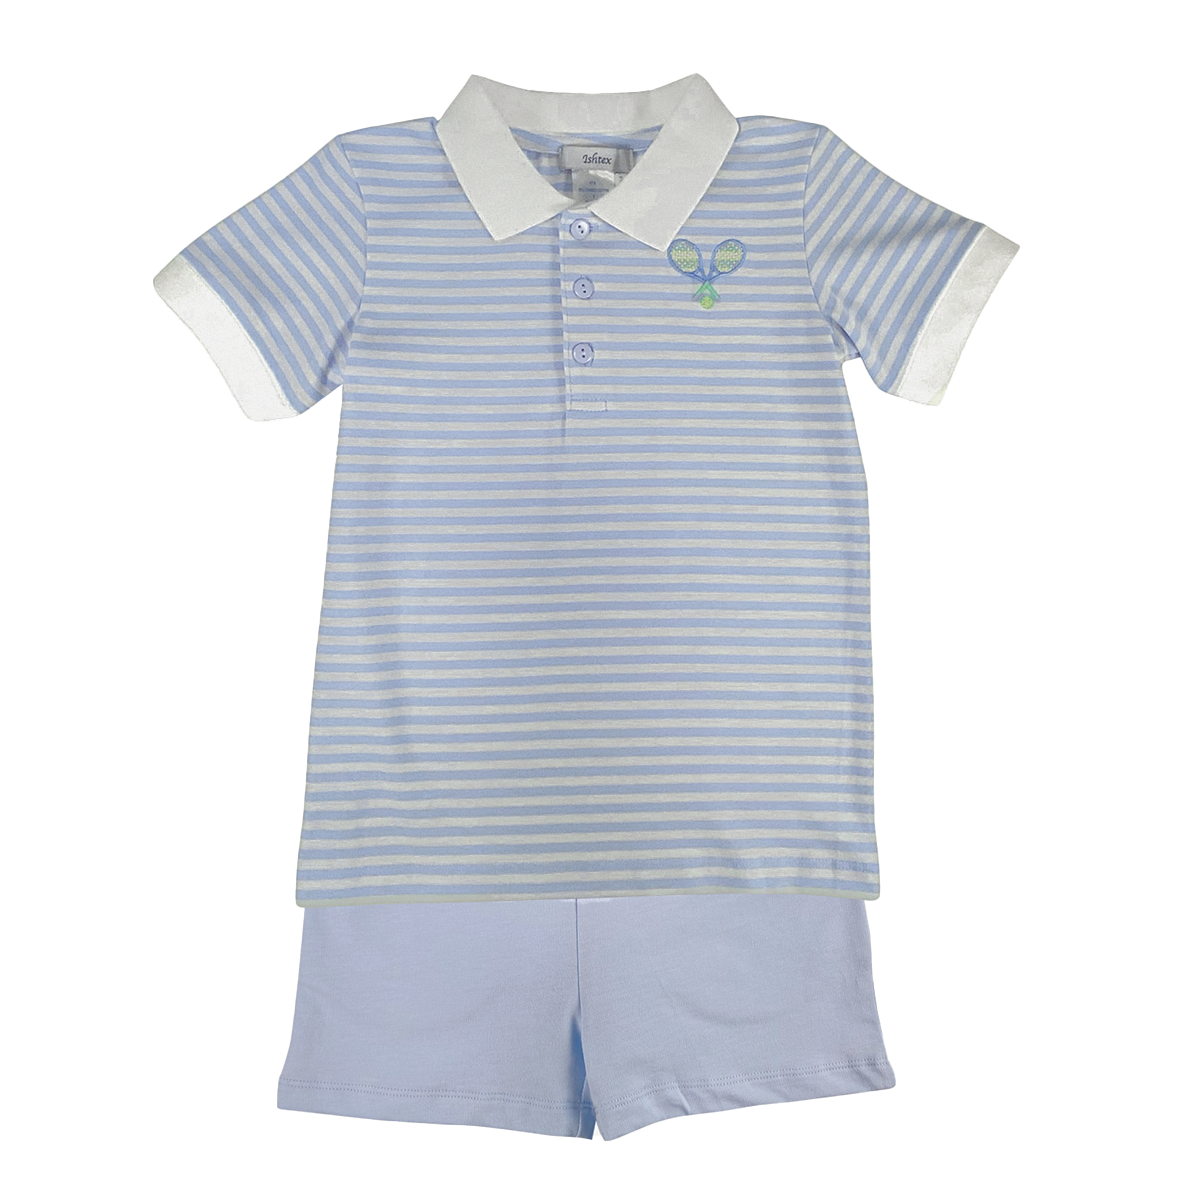 Toddler Boy's Blue Stripes Tennis Shorts Set by Ishtex